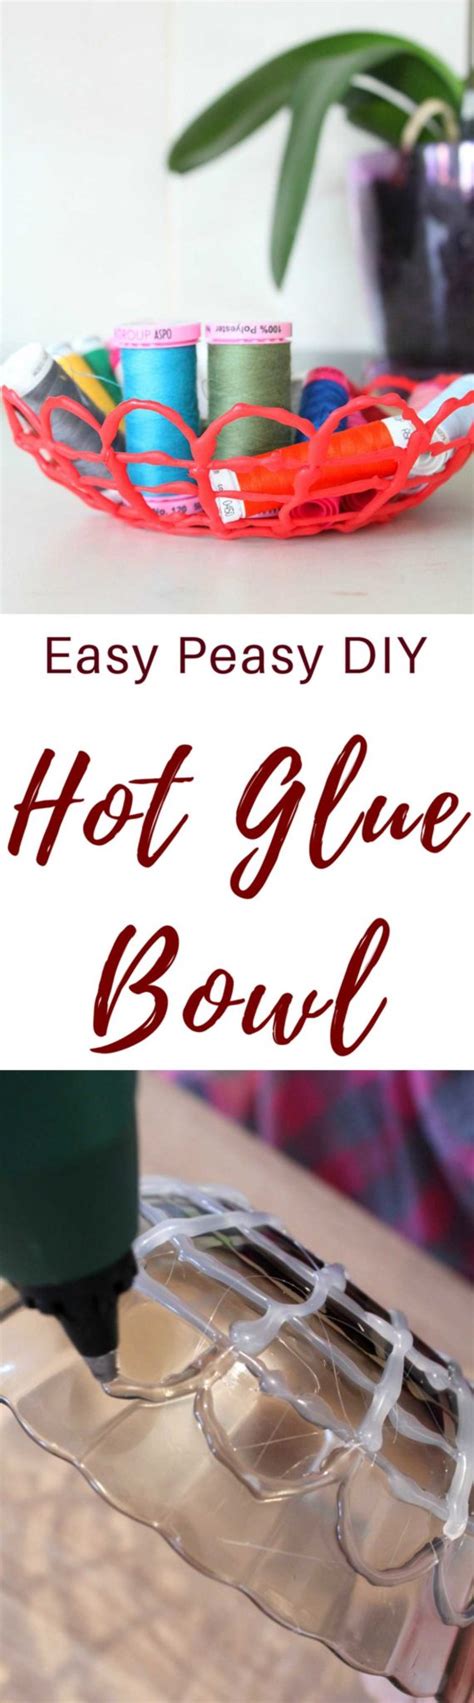 Hot Glue Bowl Easy Peasy And Quick Storage Idea